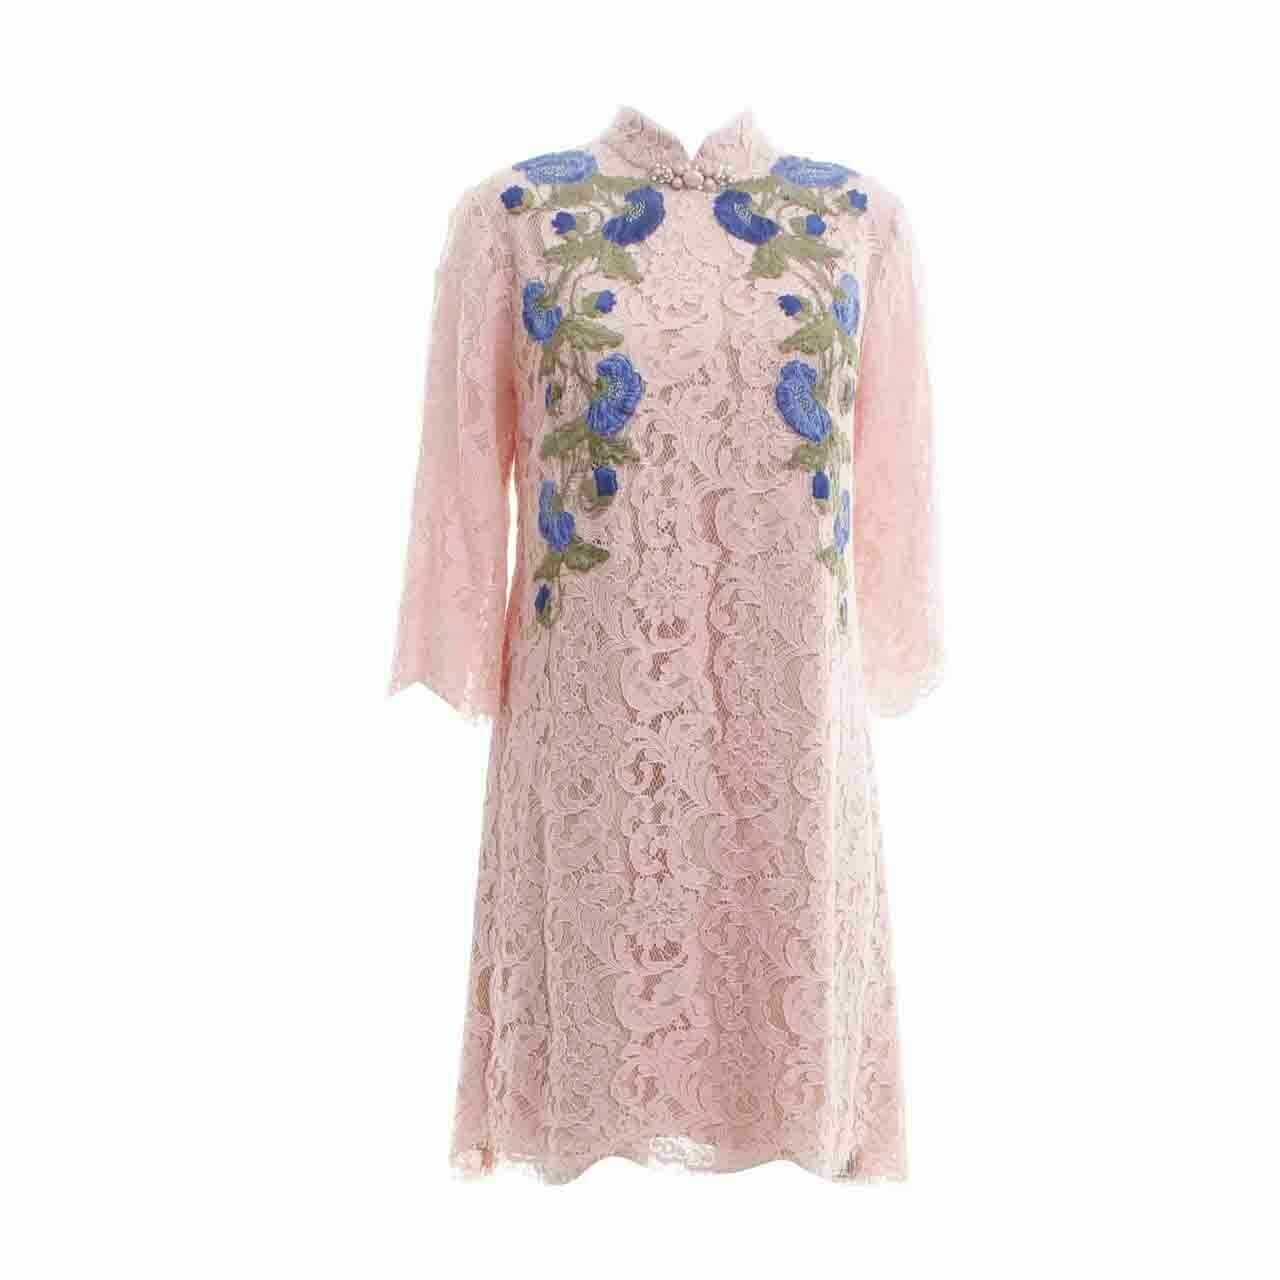 VOTUM By Sebastian & Cristina Pink Lace Embellished Midi Dress